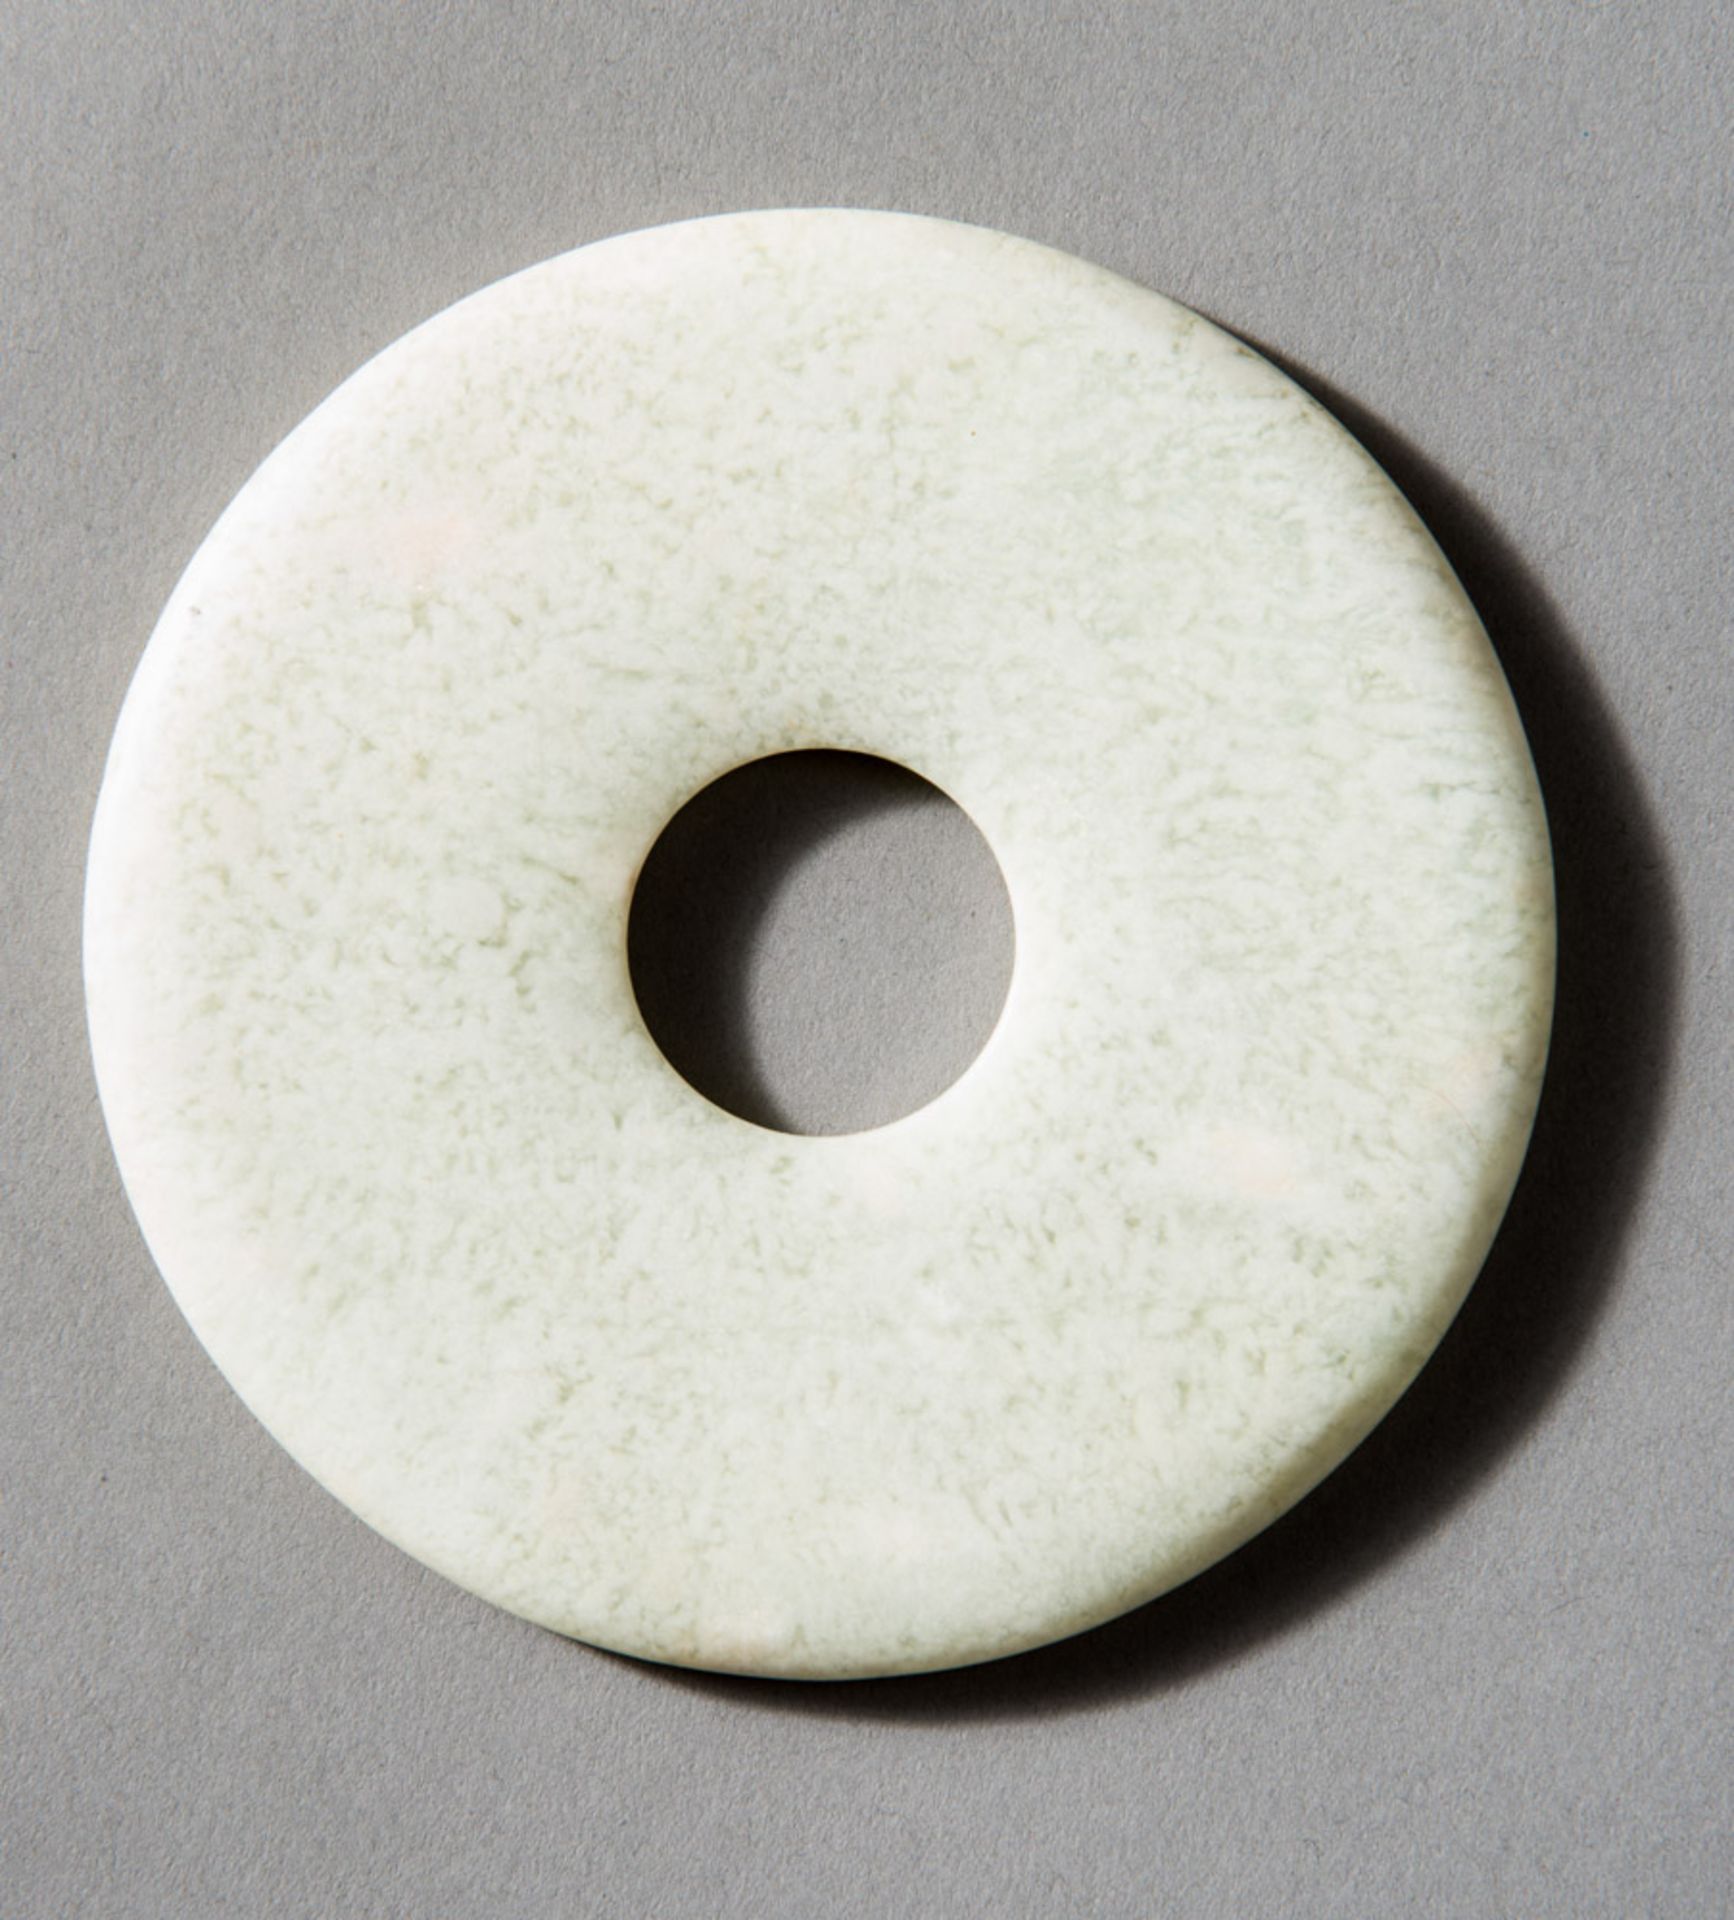 BI DISC  Jade (Nephrit), China, late Qing, ca 19th century  A disc of white jade Baiyu ?? (generally